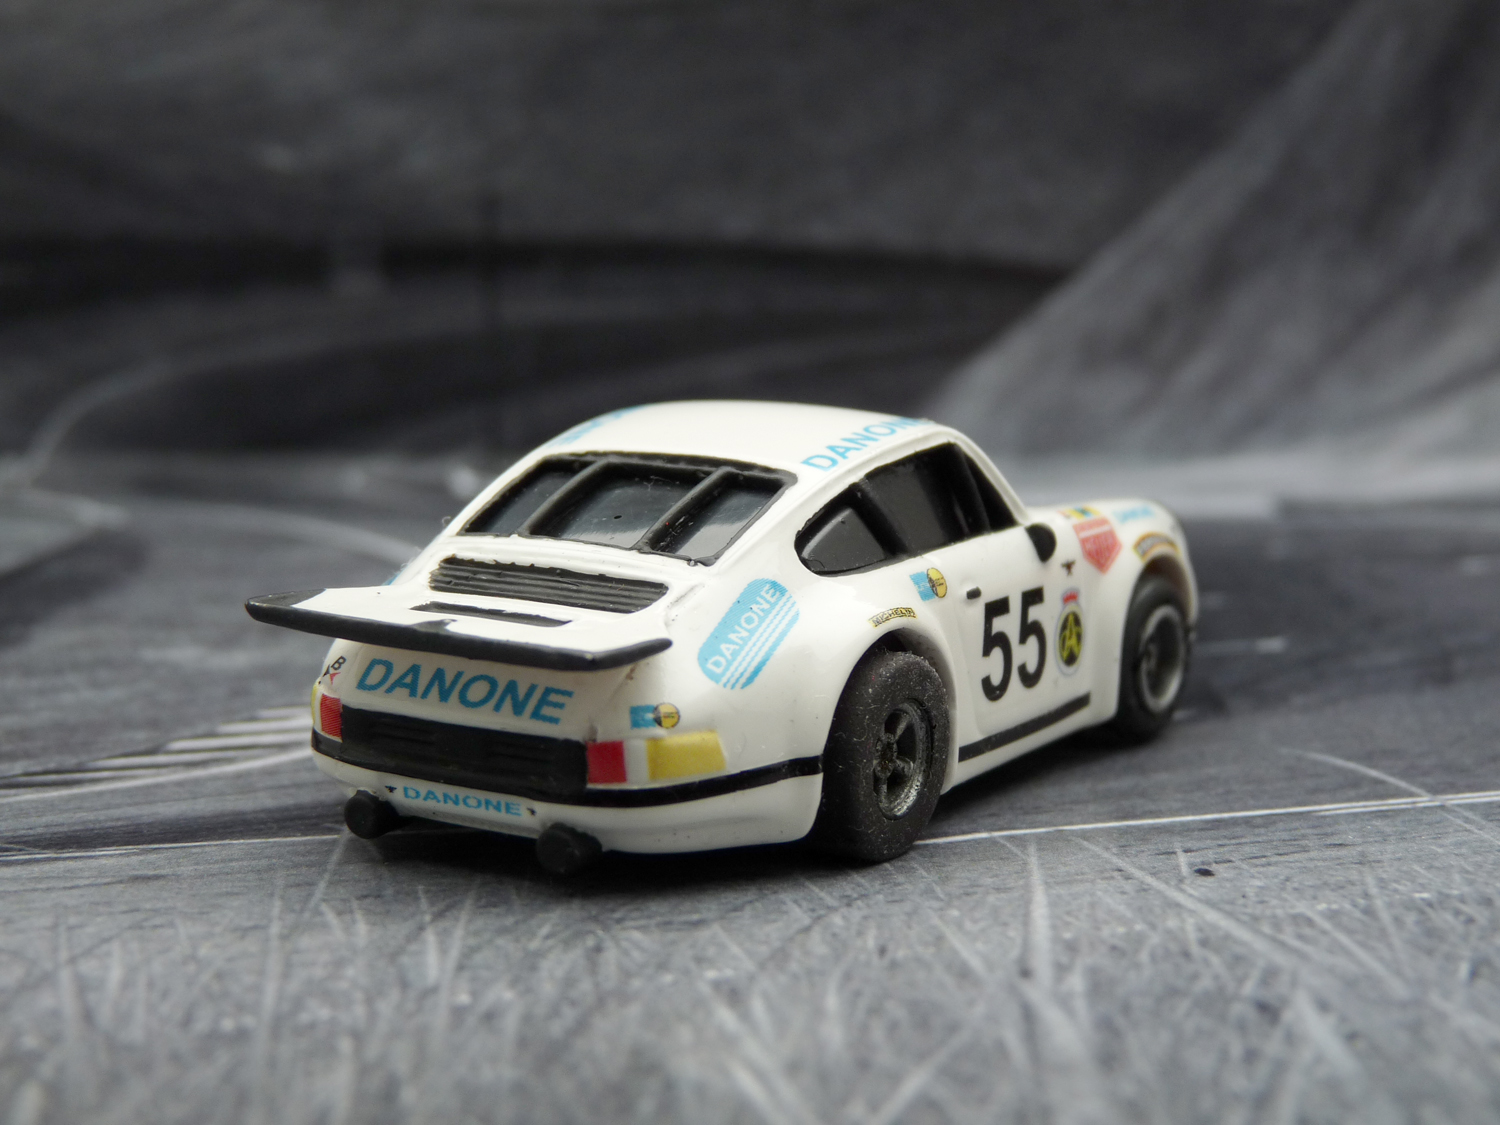 Porsche 934 RSR Danone #55